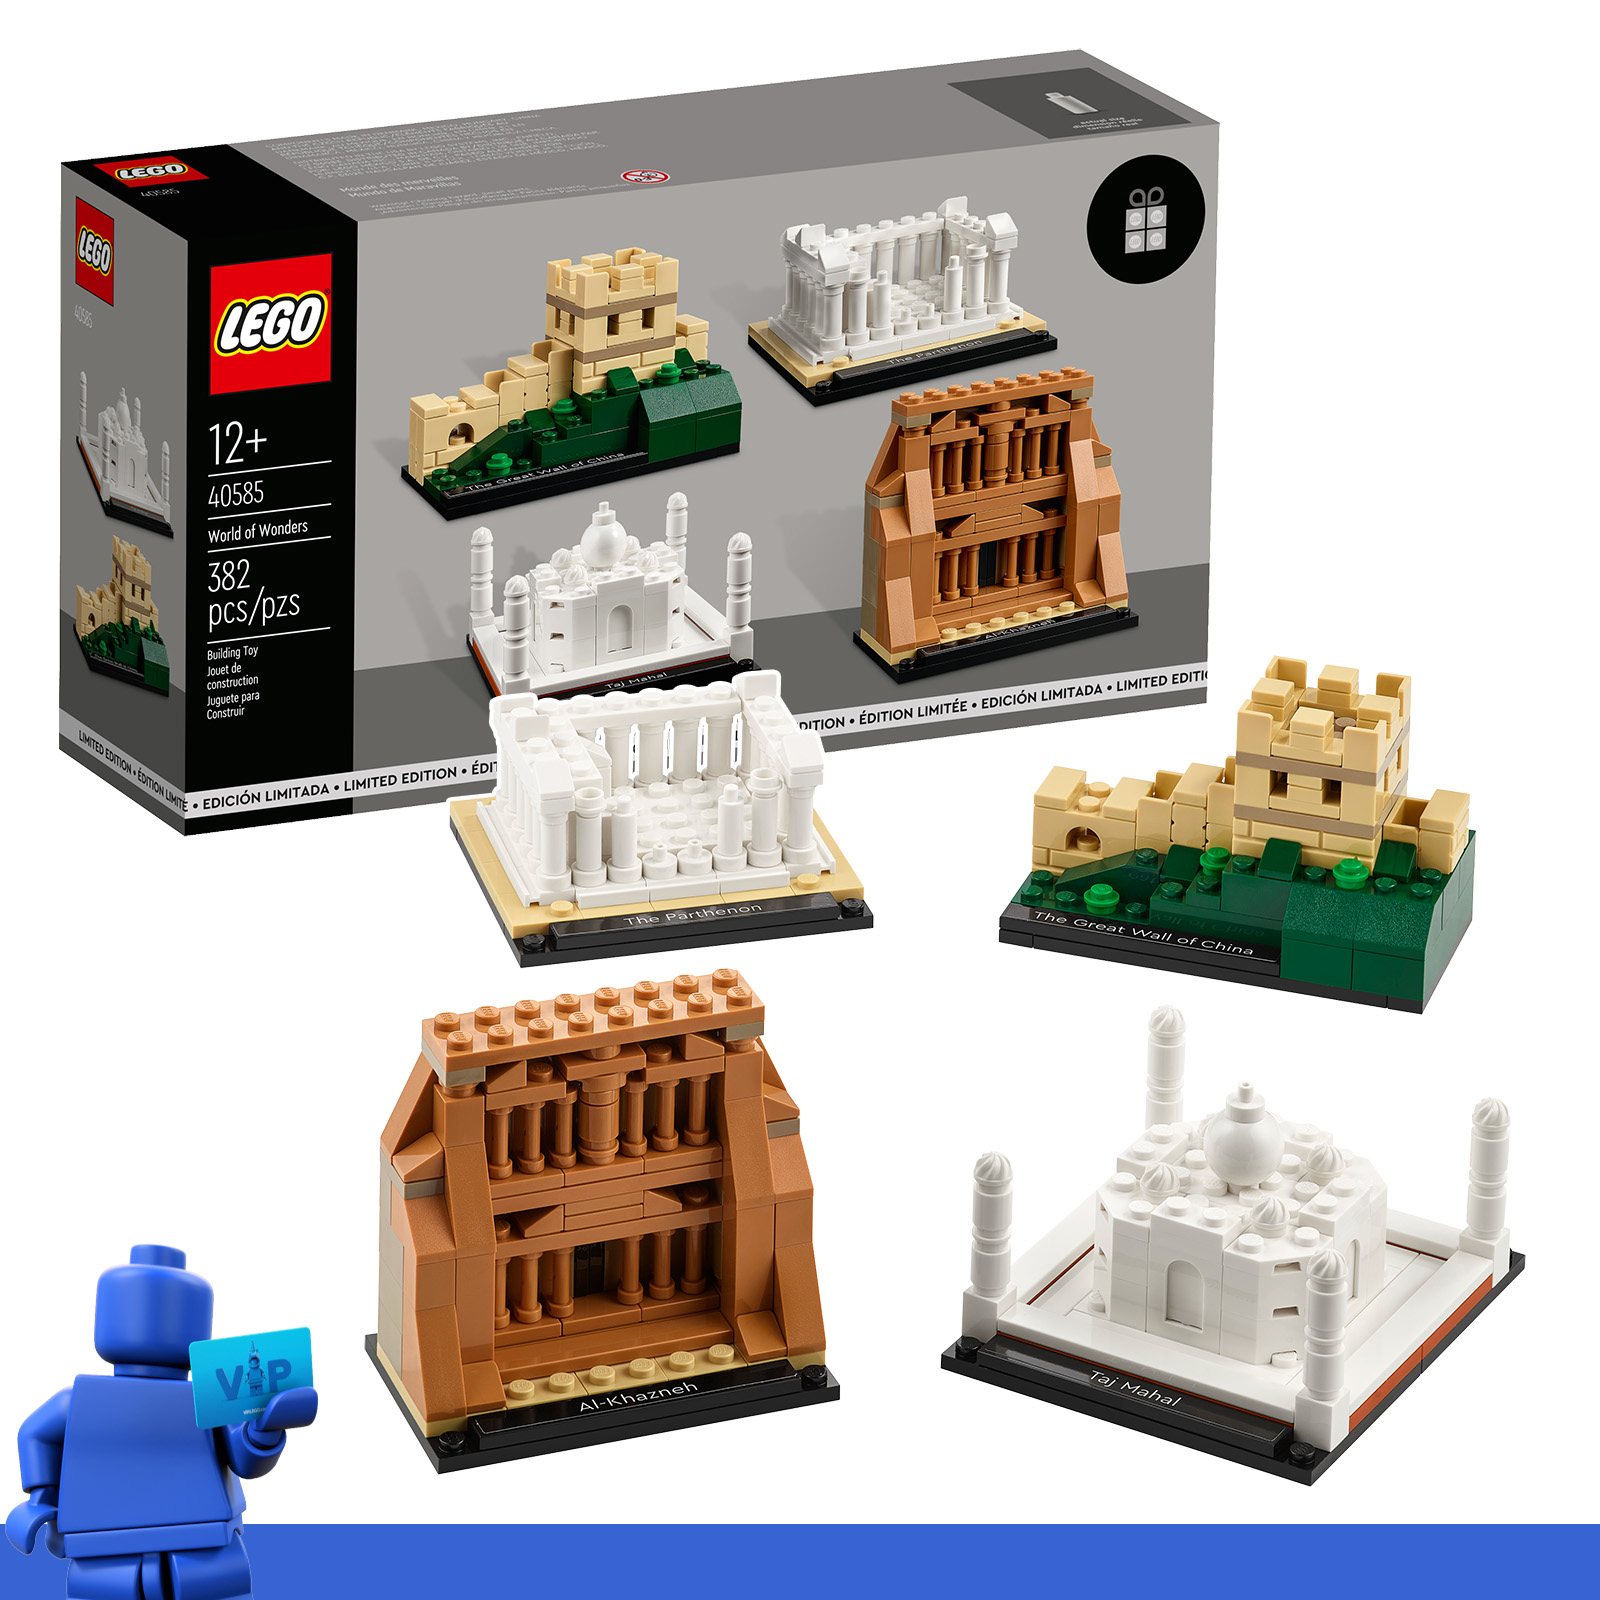 Di pusat hadiah VIP: LEGO menetapkan 40584 Diorama Ulang Tahun dan 40585 World of Wonders tersedia untuk ditukar dengan poin VIP